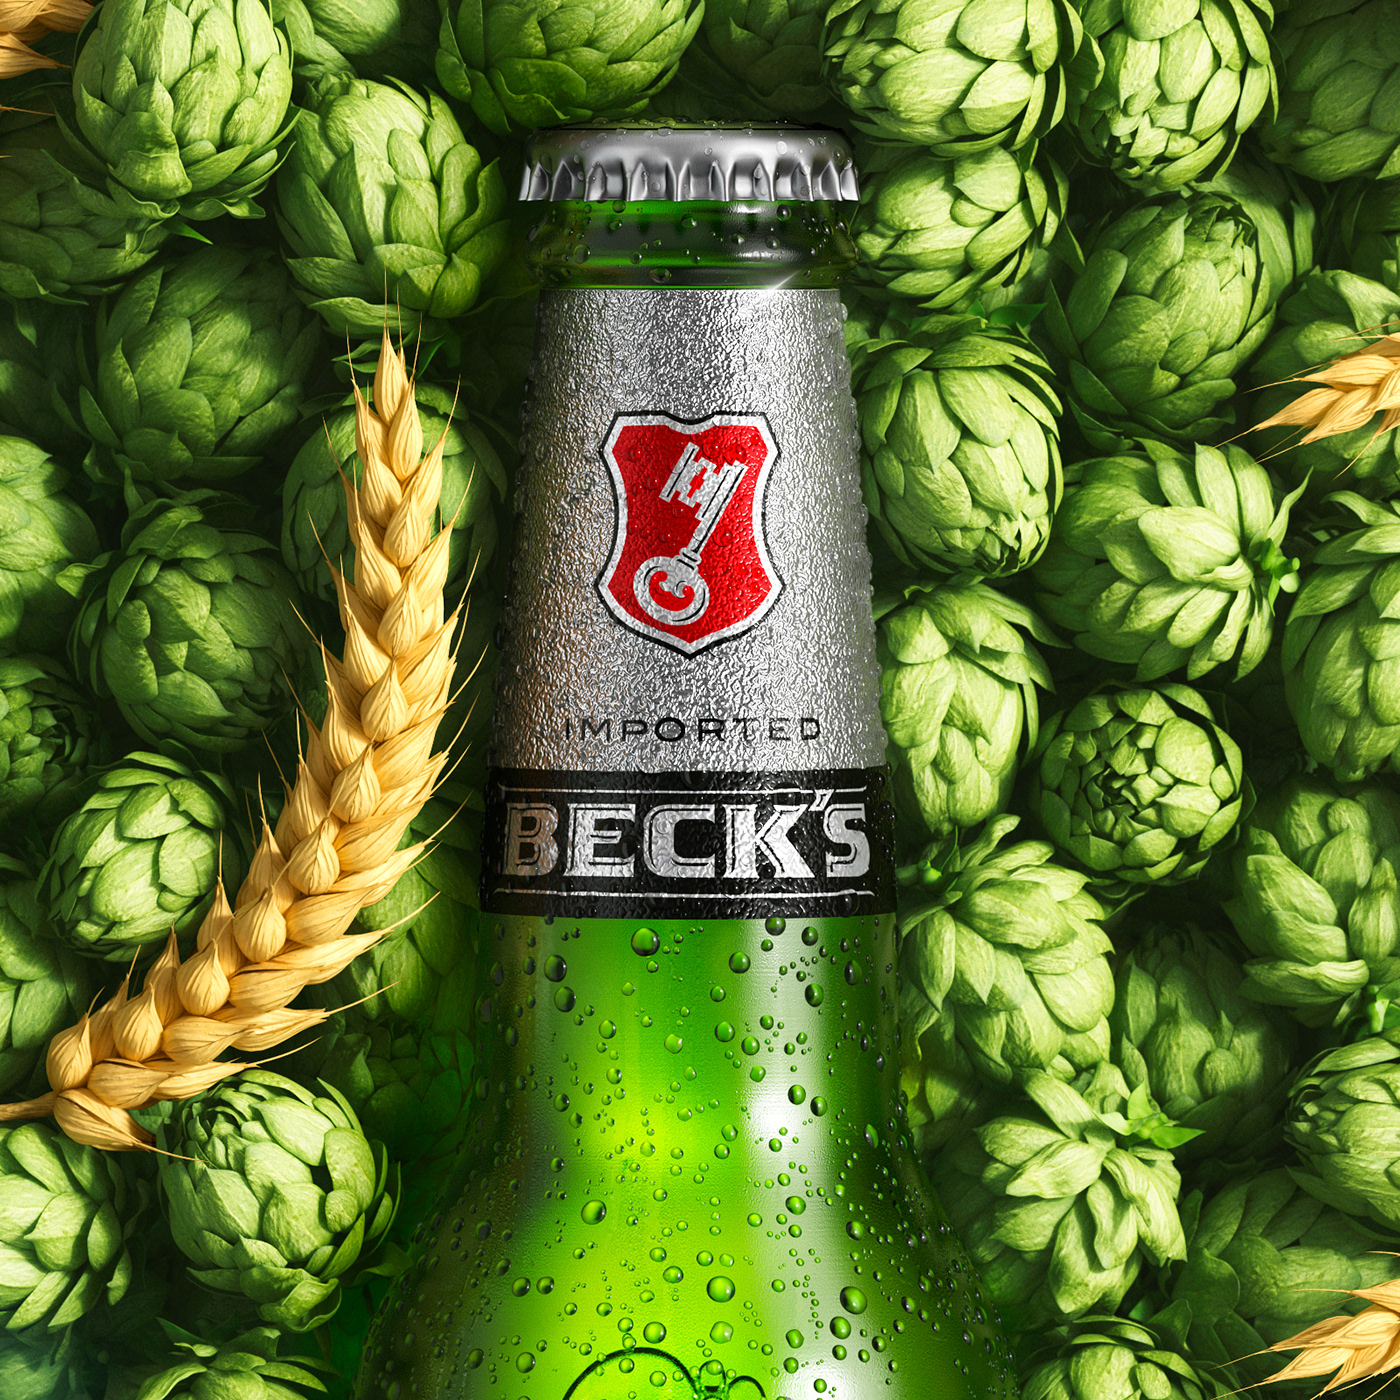 Becks beer bottle 3D Advertising  art CGI design ILLUSTRATION  Render